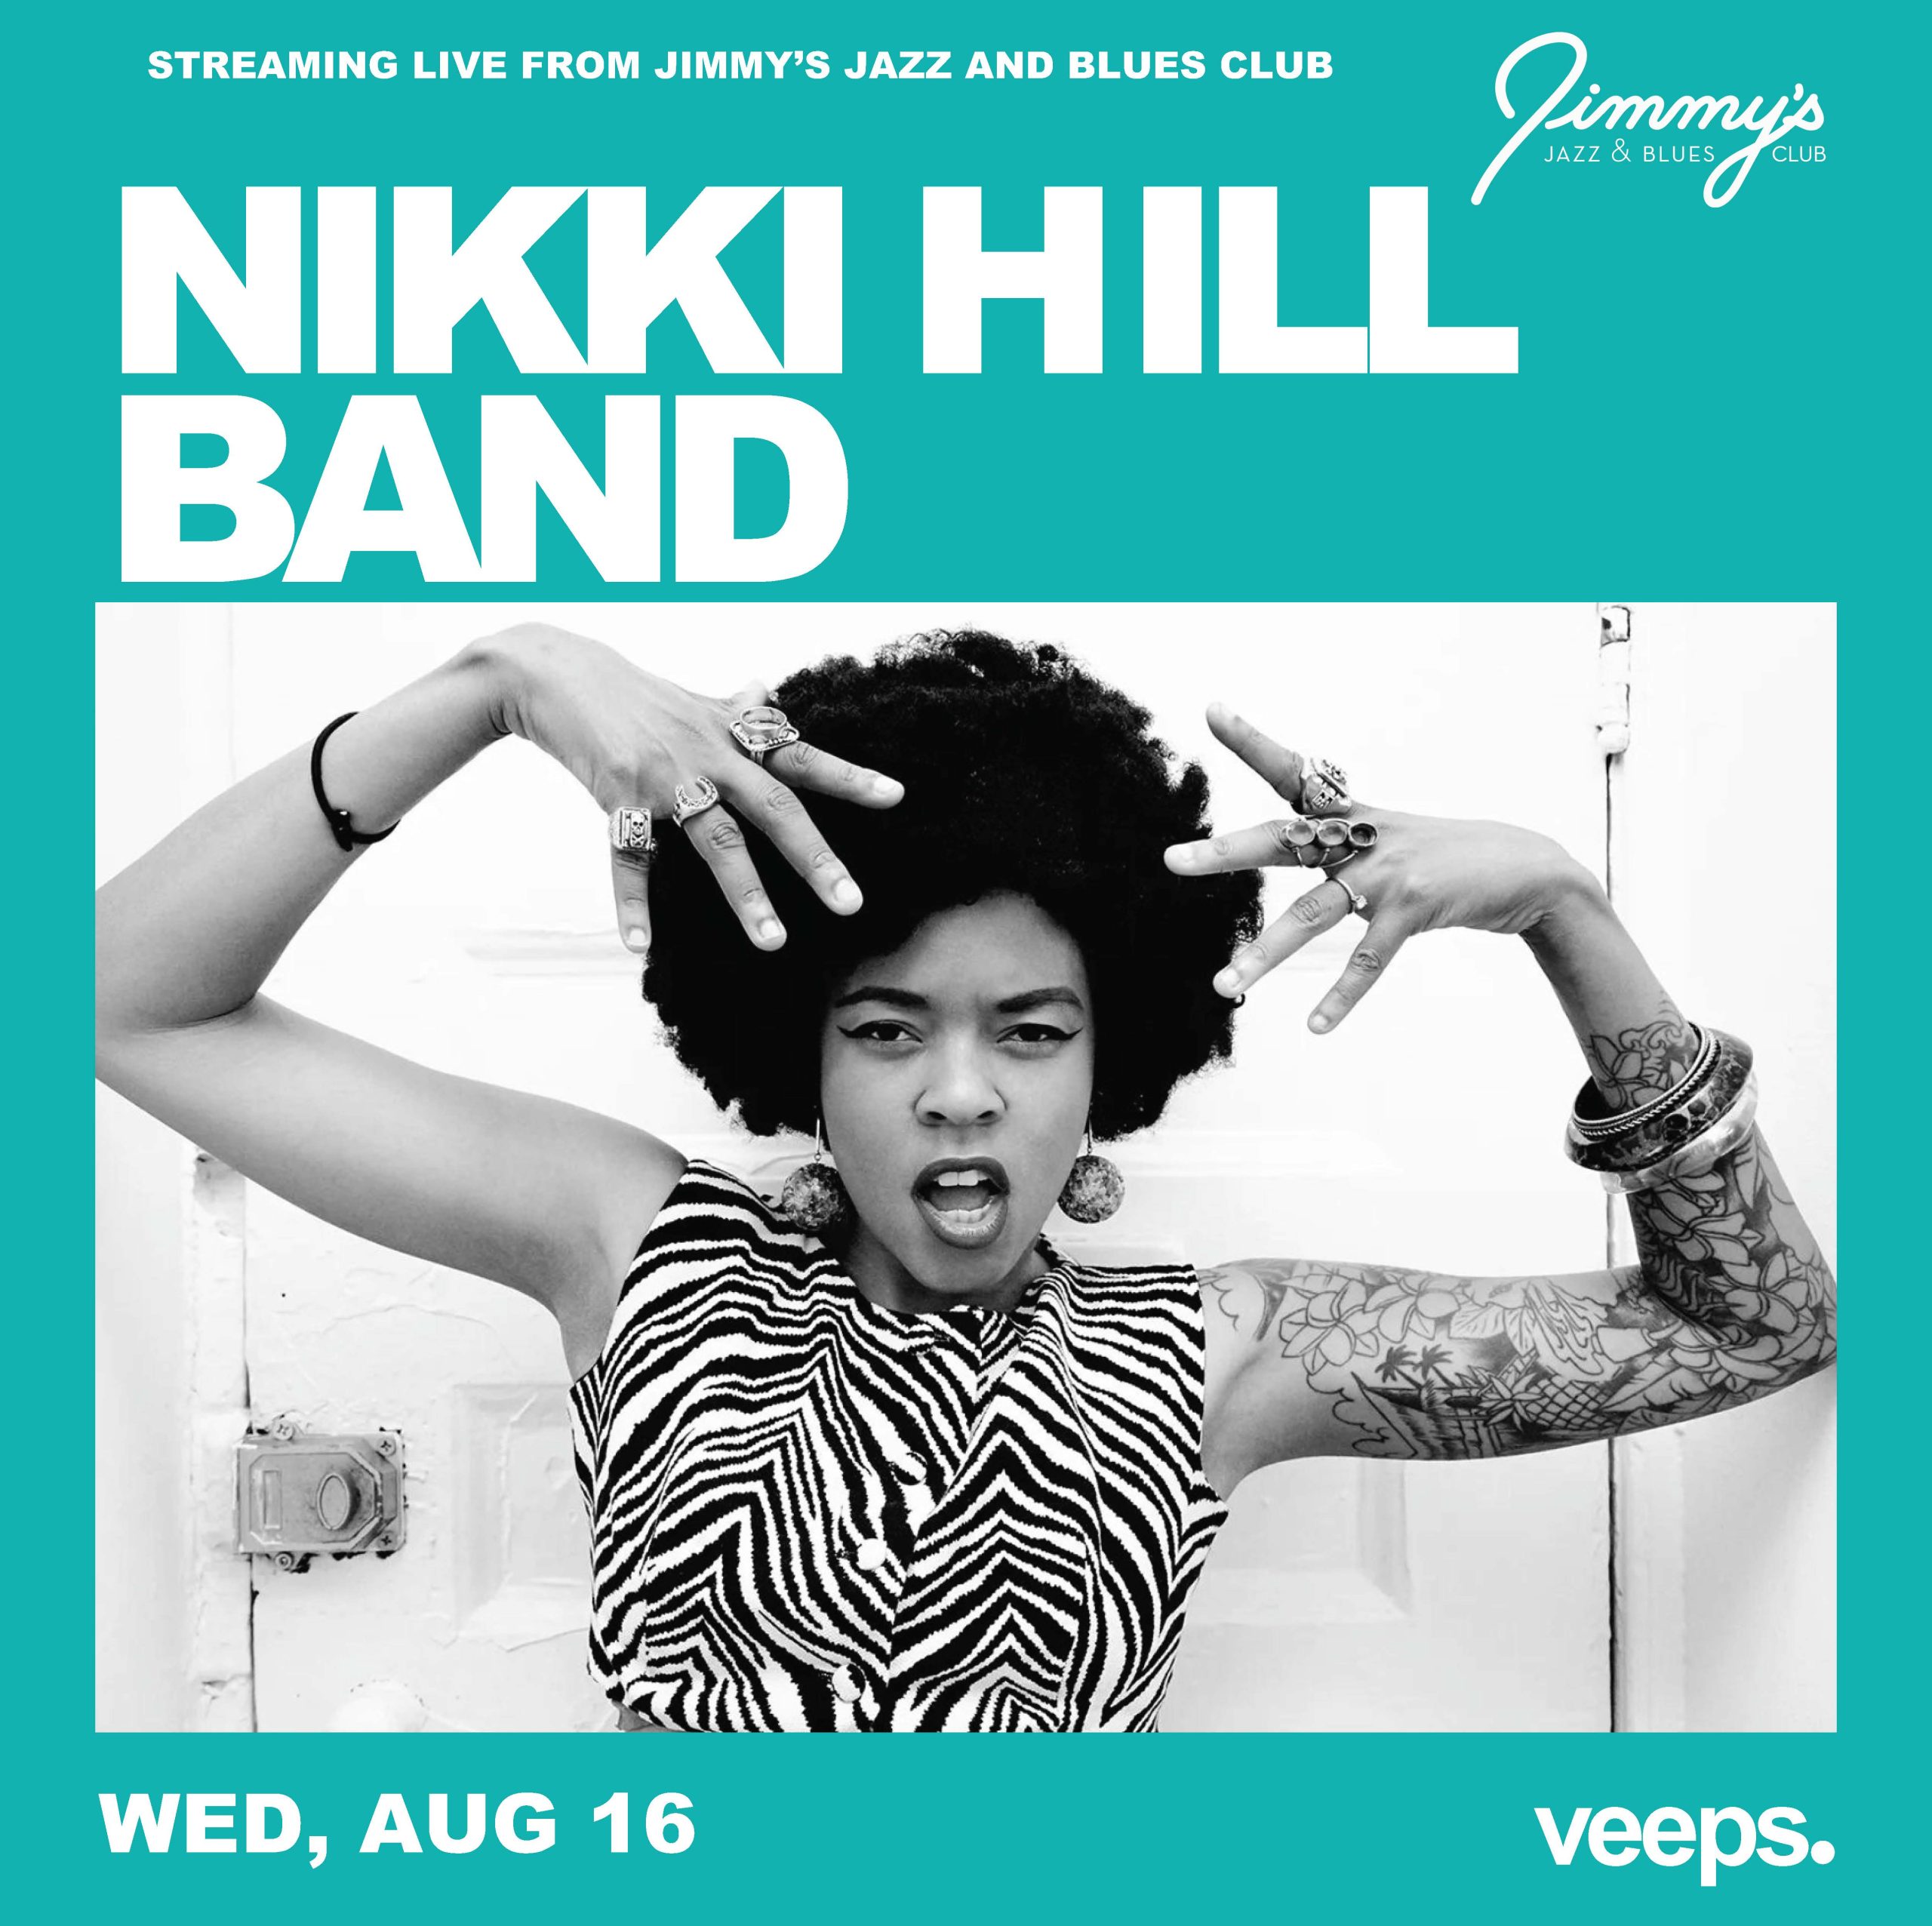 Nikki Hill Band Livestream from Jimmy’s Jazz & Blues Club